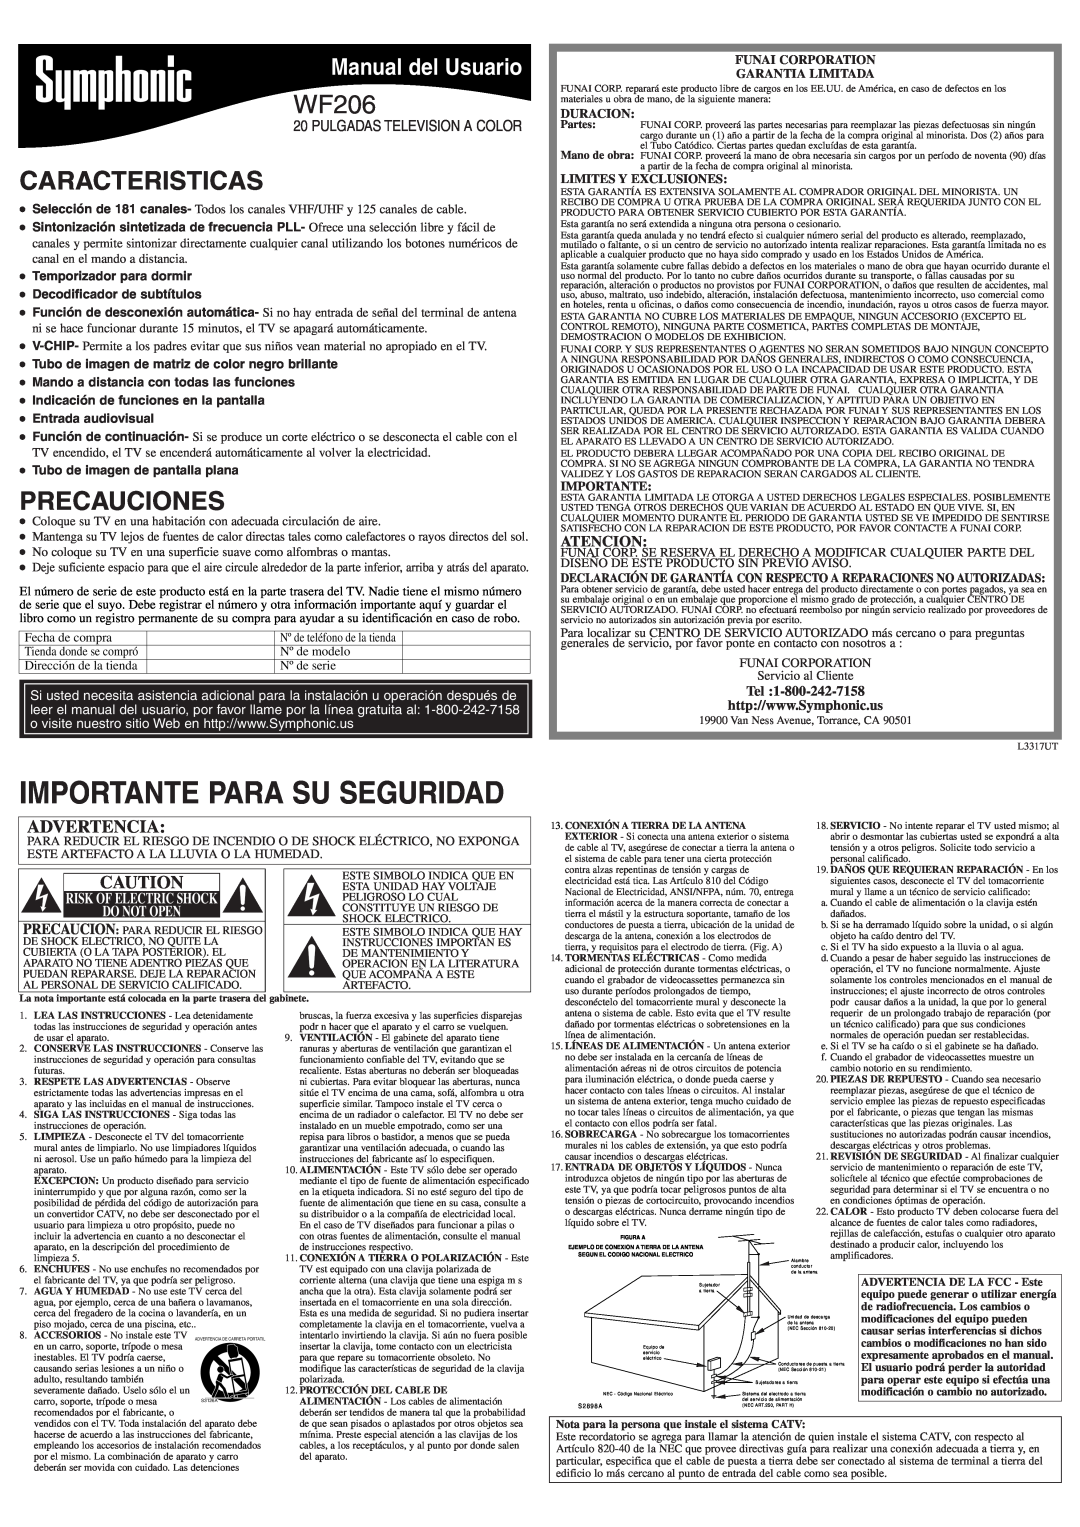 Symphonic WF206 Caracteristicas, Precauciones, Manual del Usuario, Atencion, Funai Corporation Garantia Limitada, Duracion 